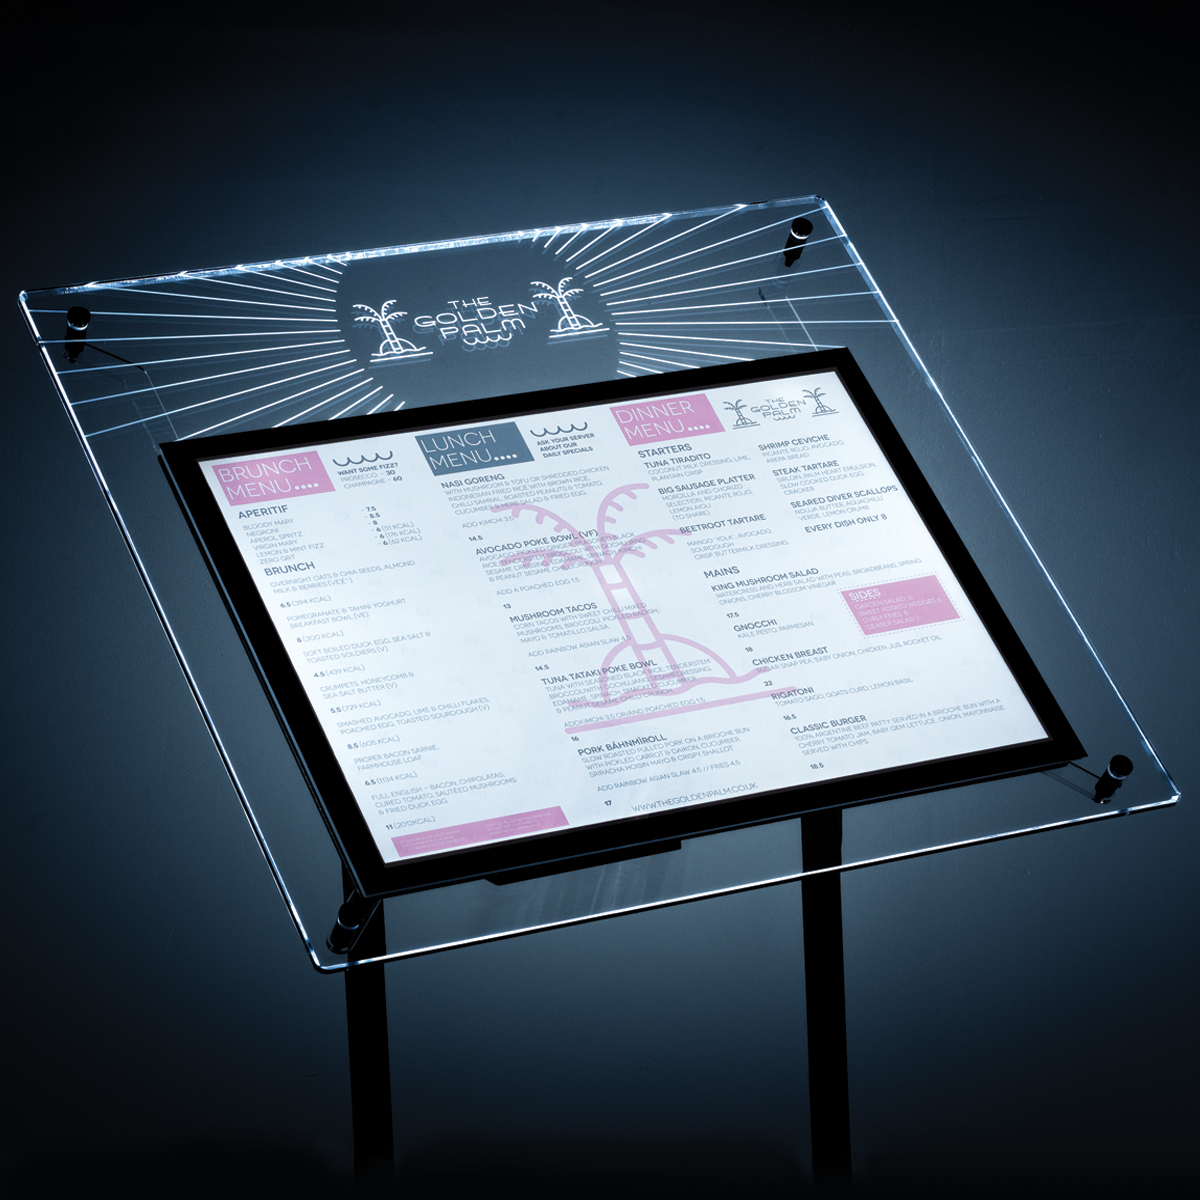 eye catching menu boards, restaurant menu boards, restaurant menu displays, illuminated menus.